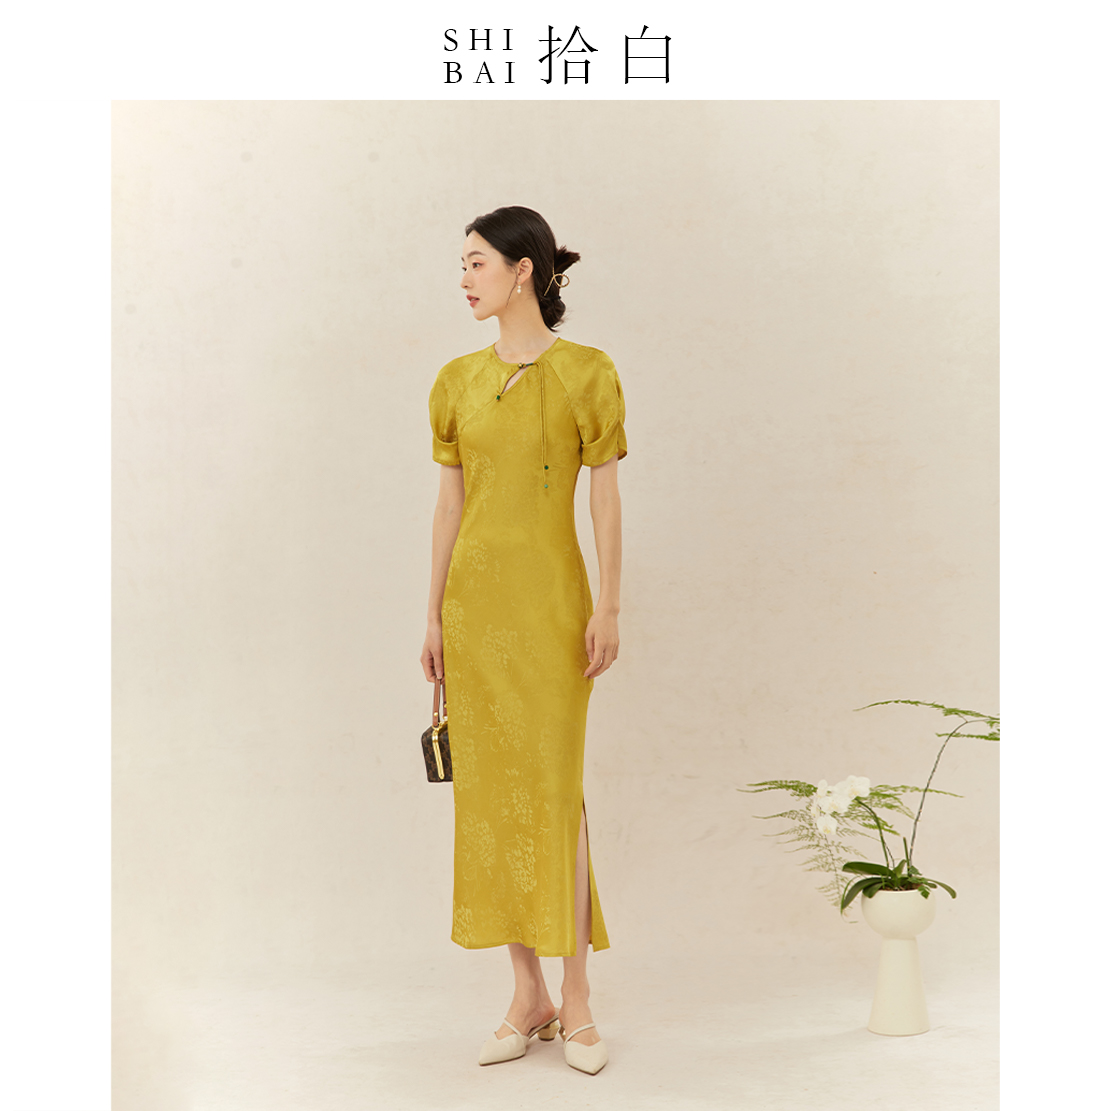 SHIBAI拾白新中式连衣裙原创国风女装优雅黄色裙子女茶服日常通勤